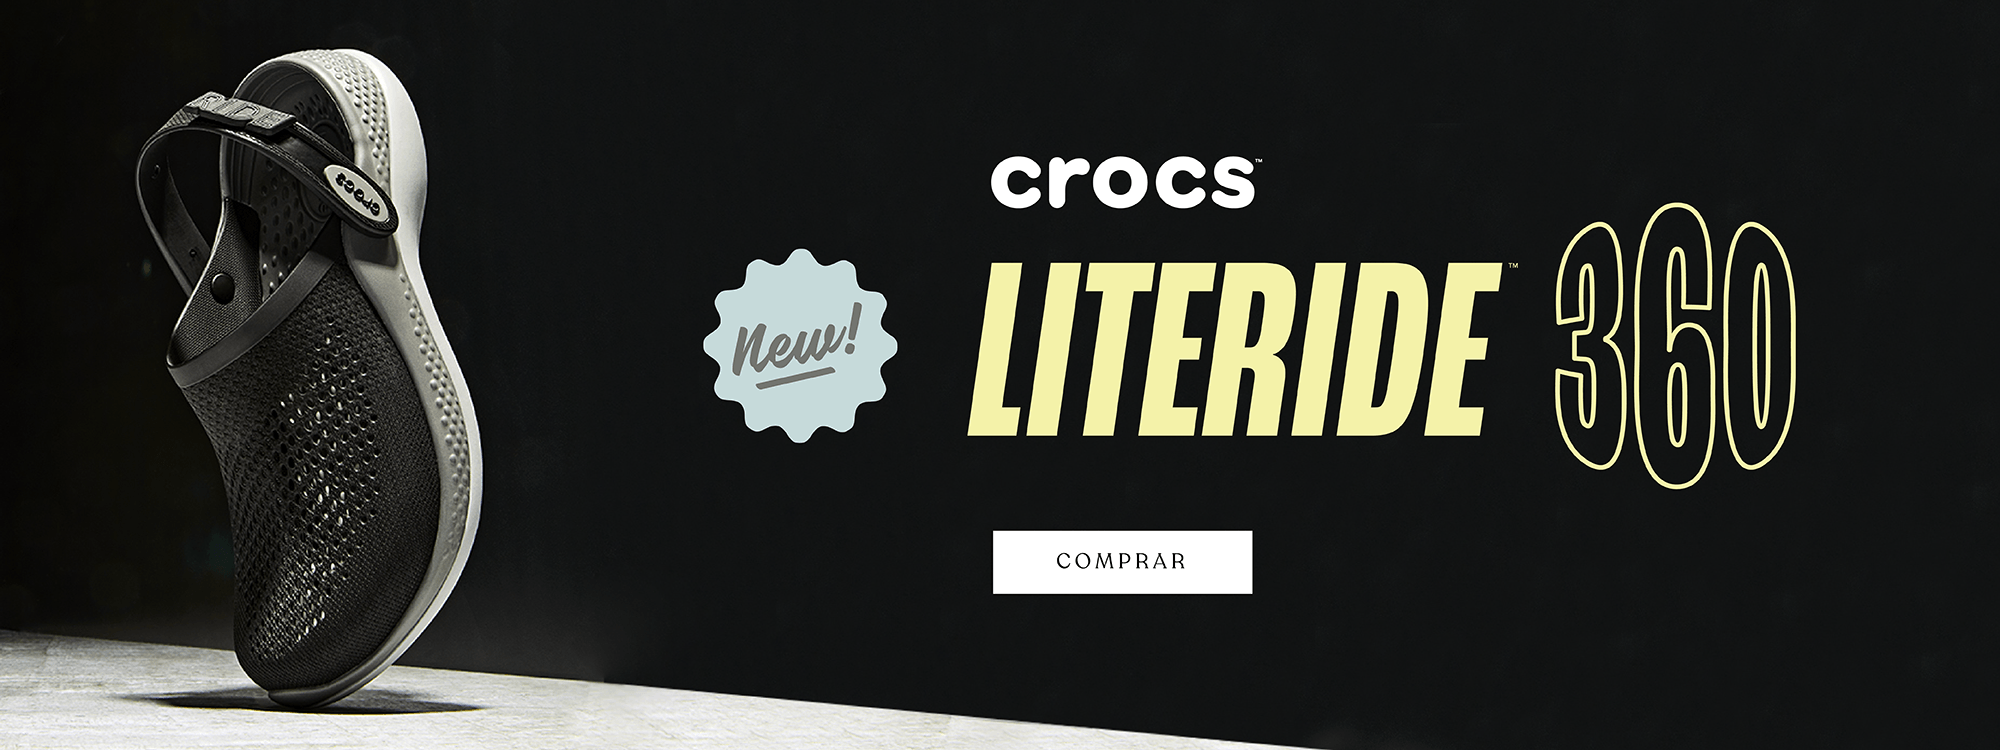 Crocs_Literida_360